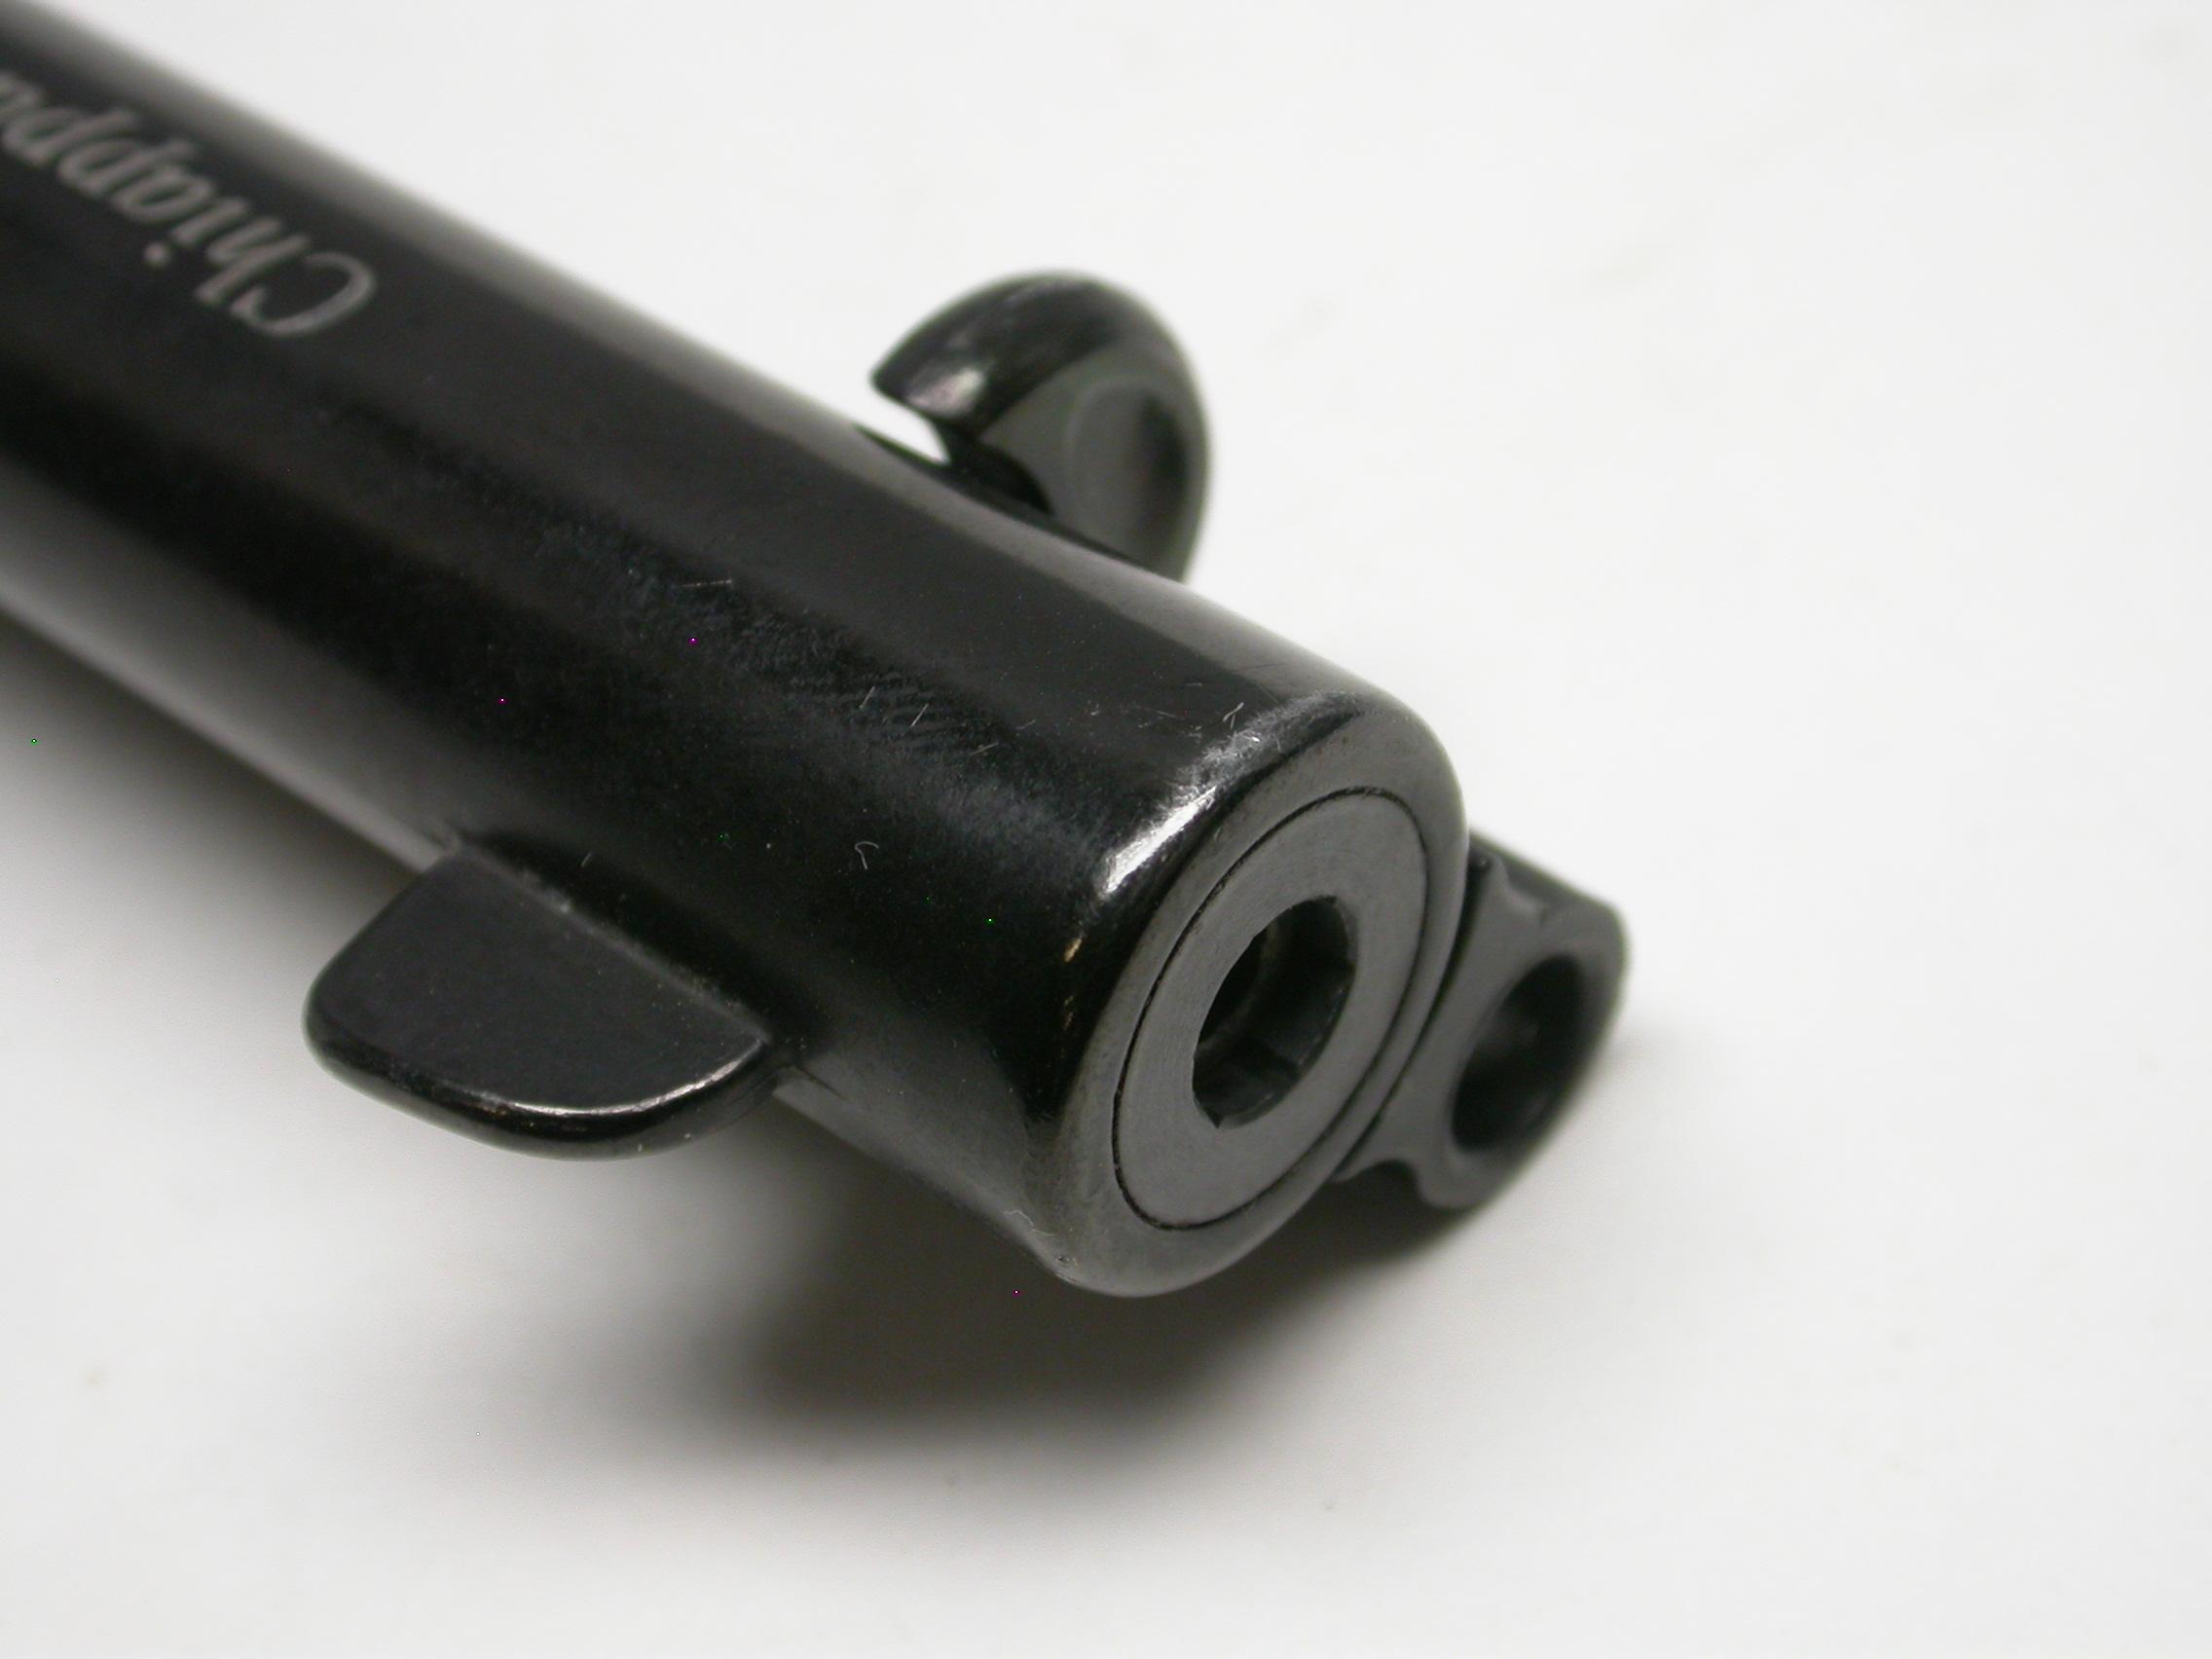 Chiappa Arms SAA .177 Caliber Single-Action Revolver - FFL #16H03025 (DB)